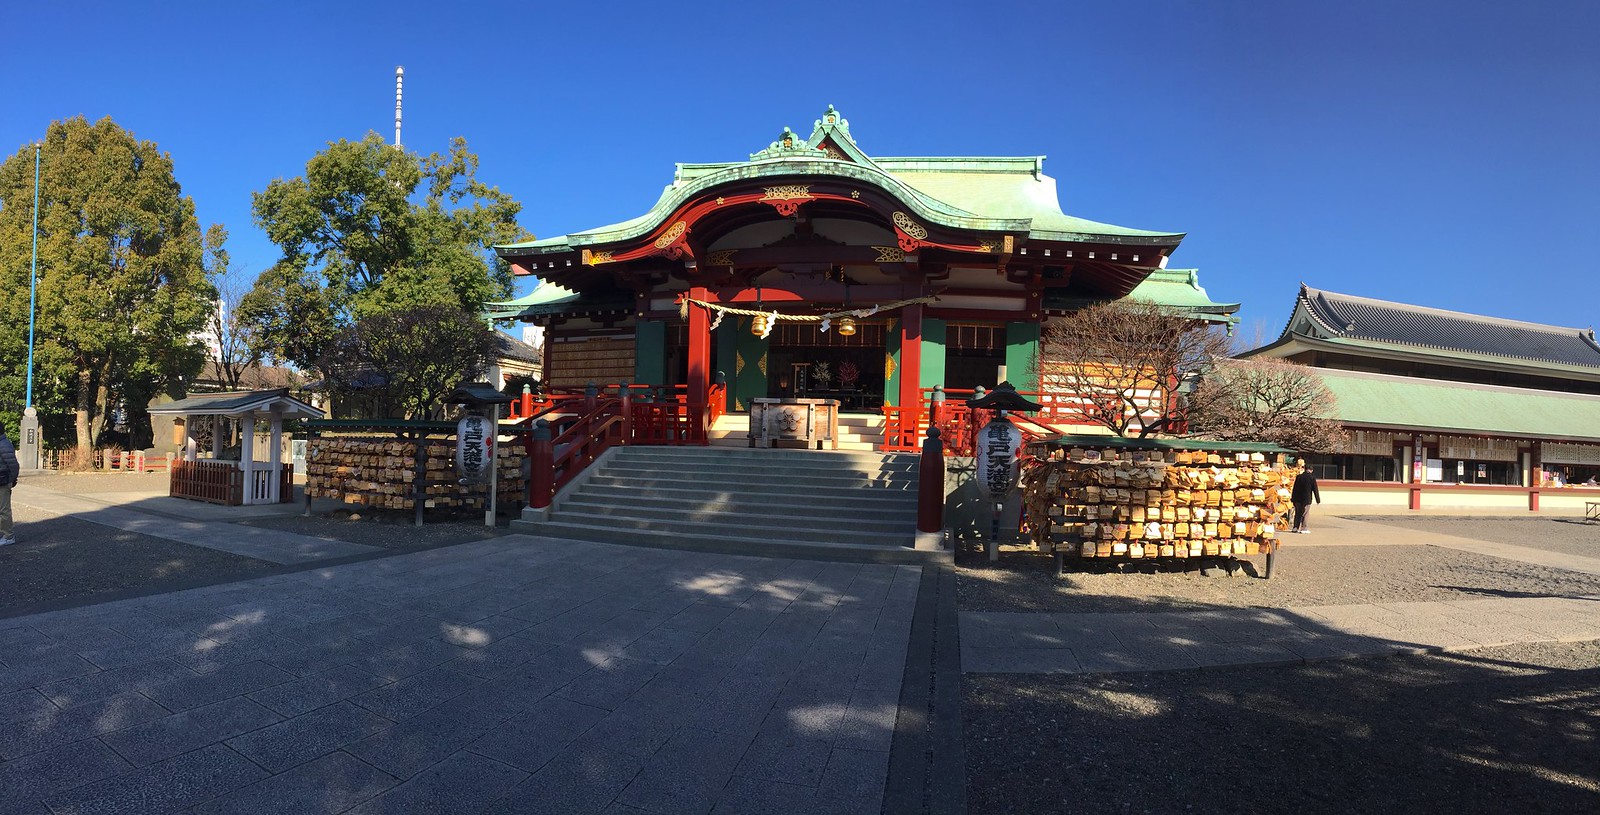 Panorama of the Kameido Tenjin Shrine